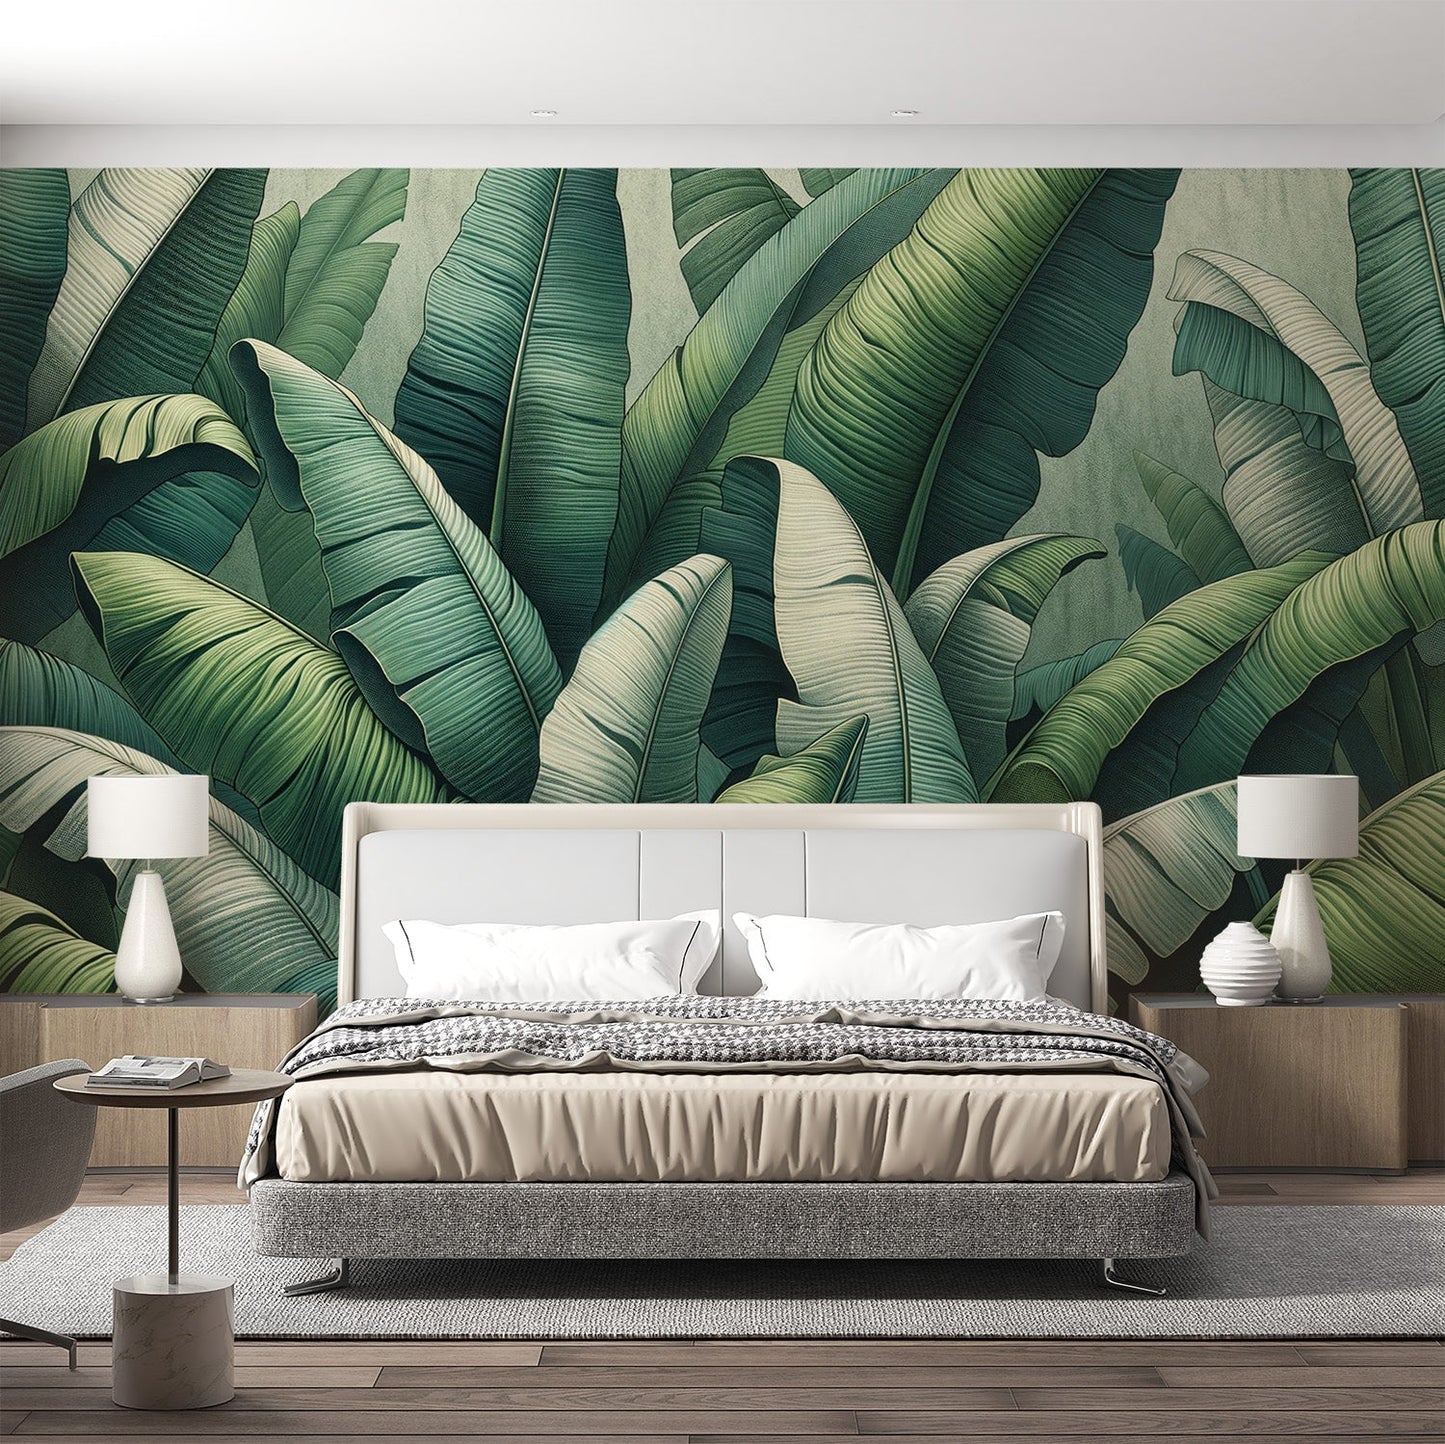 Tropical jungle wallpaper | Green banana leaves